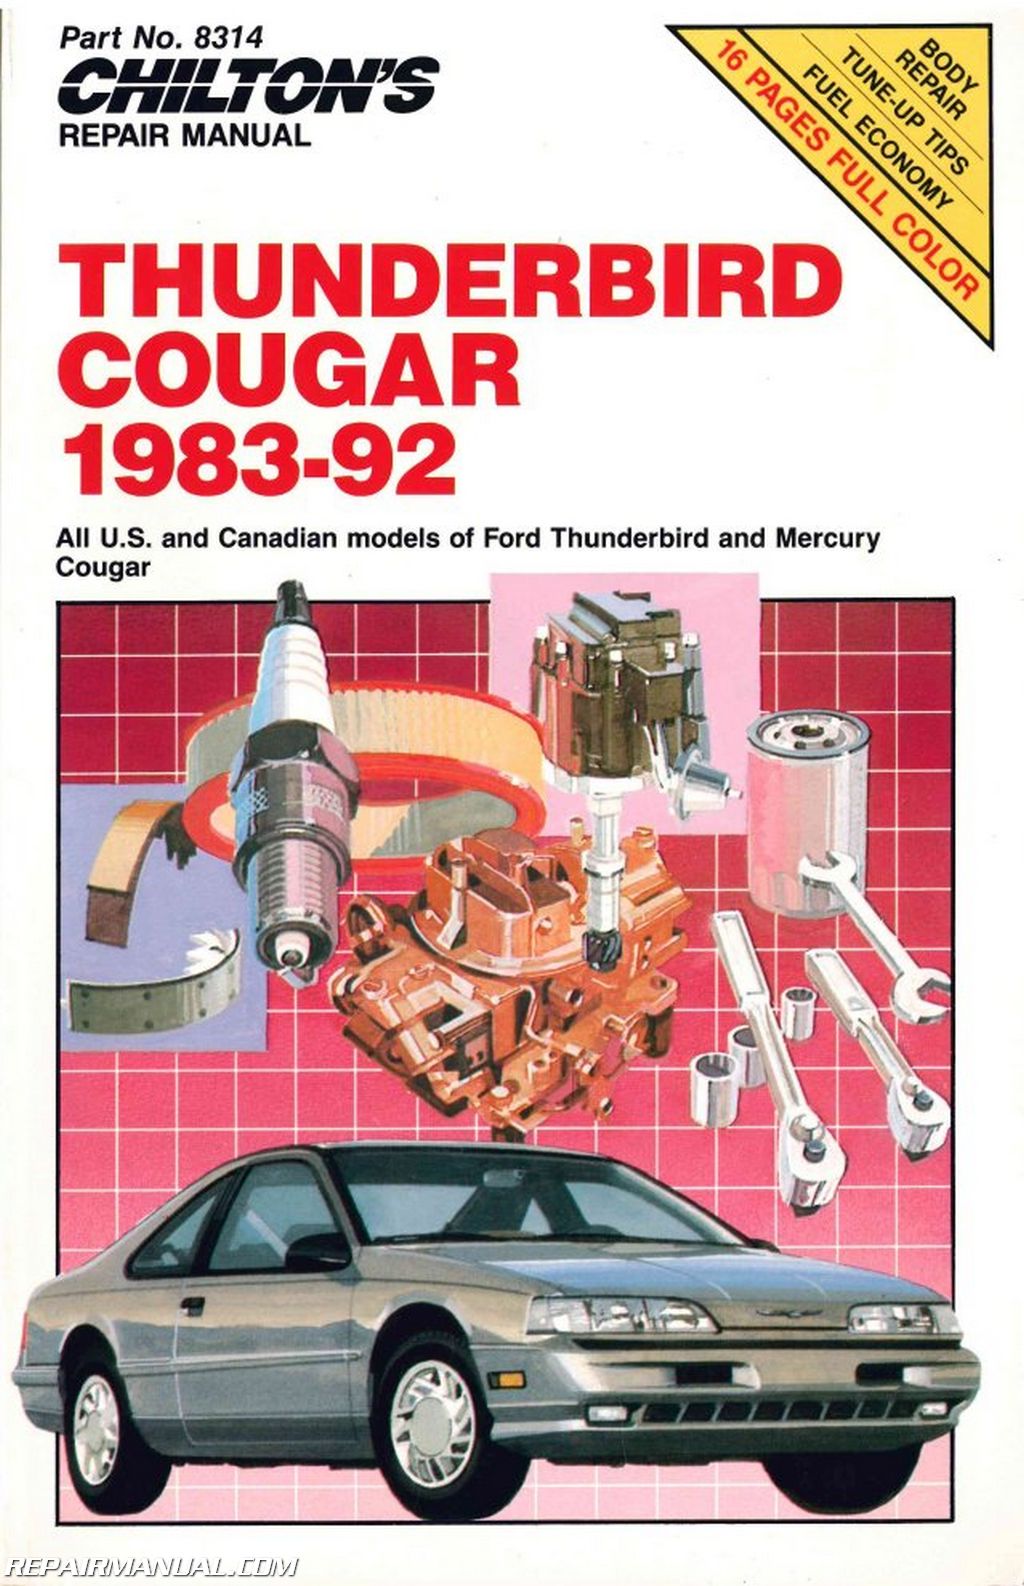 SHOP MANUAL SERVICE REPAIR 1991 FORD THUNDERBIRD COUGAR BOOK 